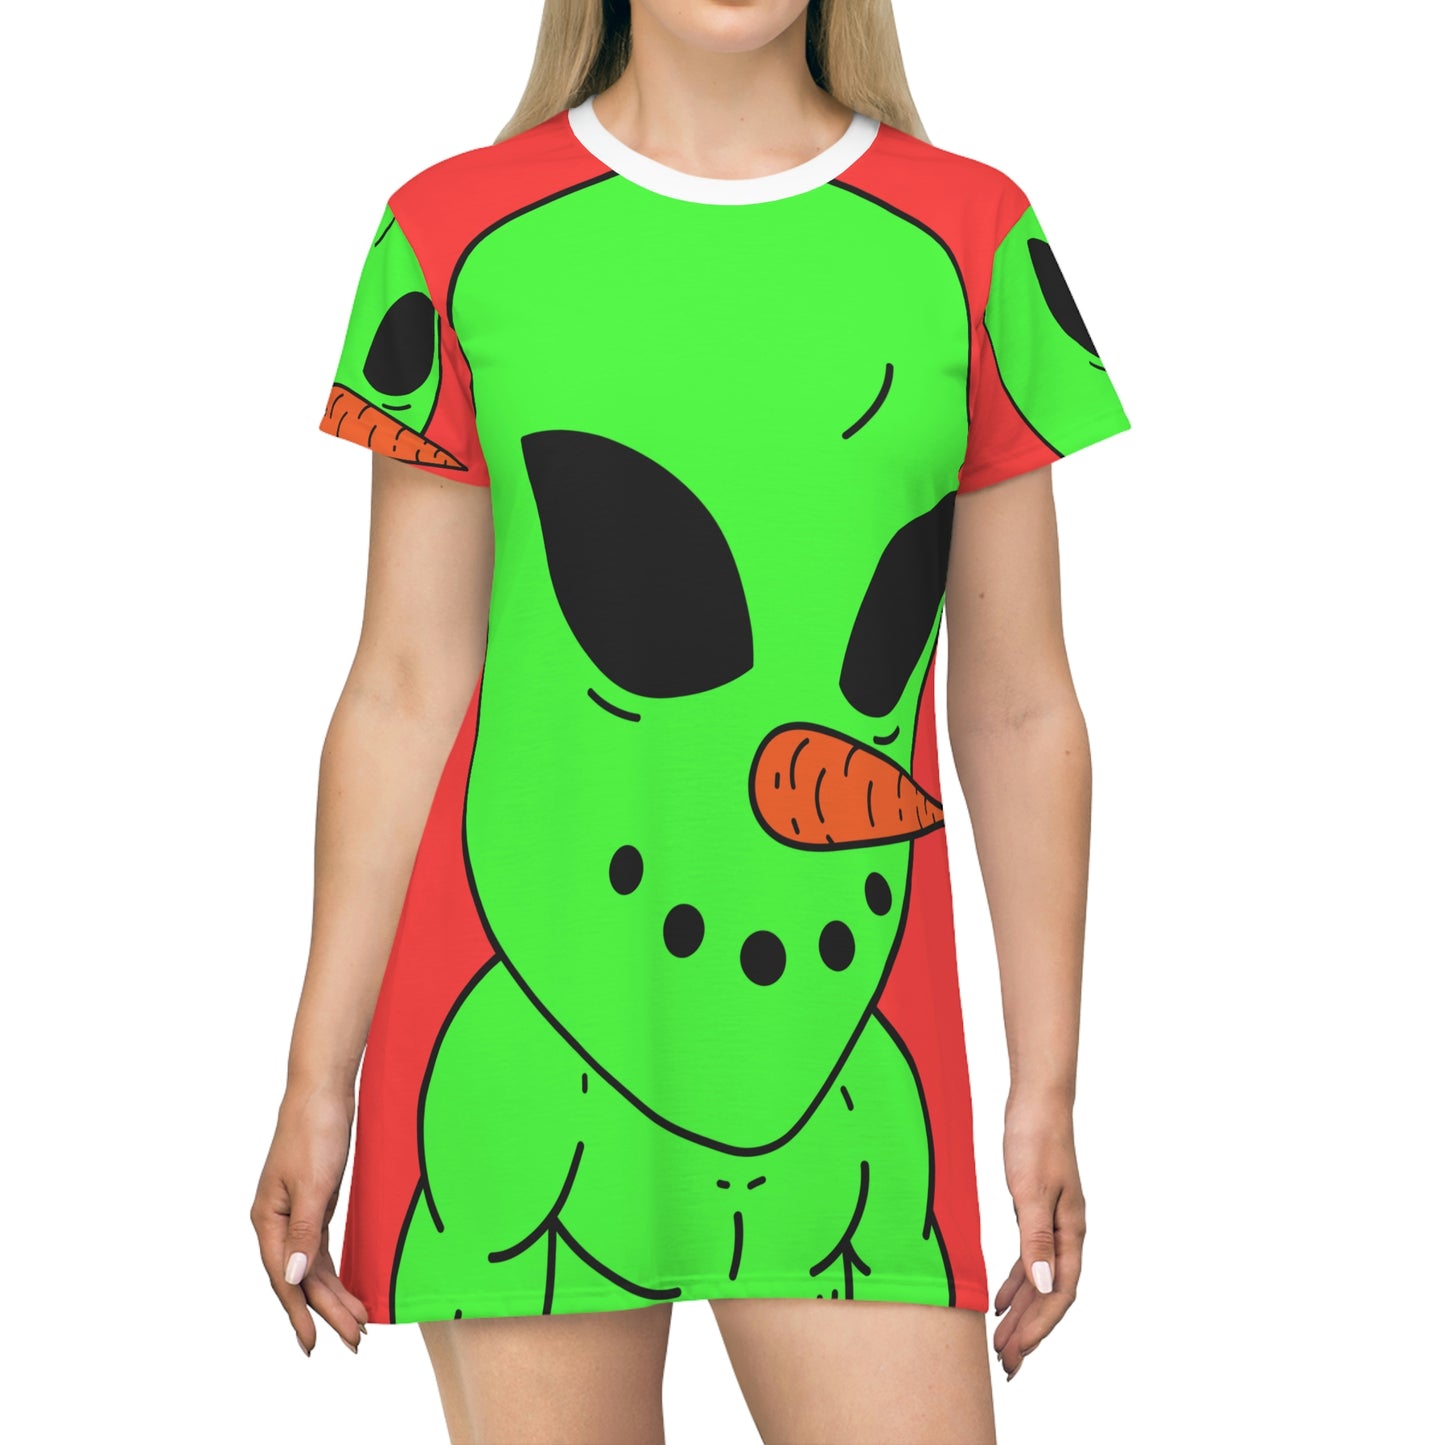 Veggie Visi The Vegetable Visitor All Over Print T-Shirt Dress